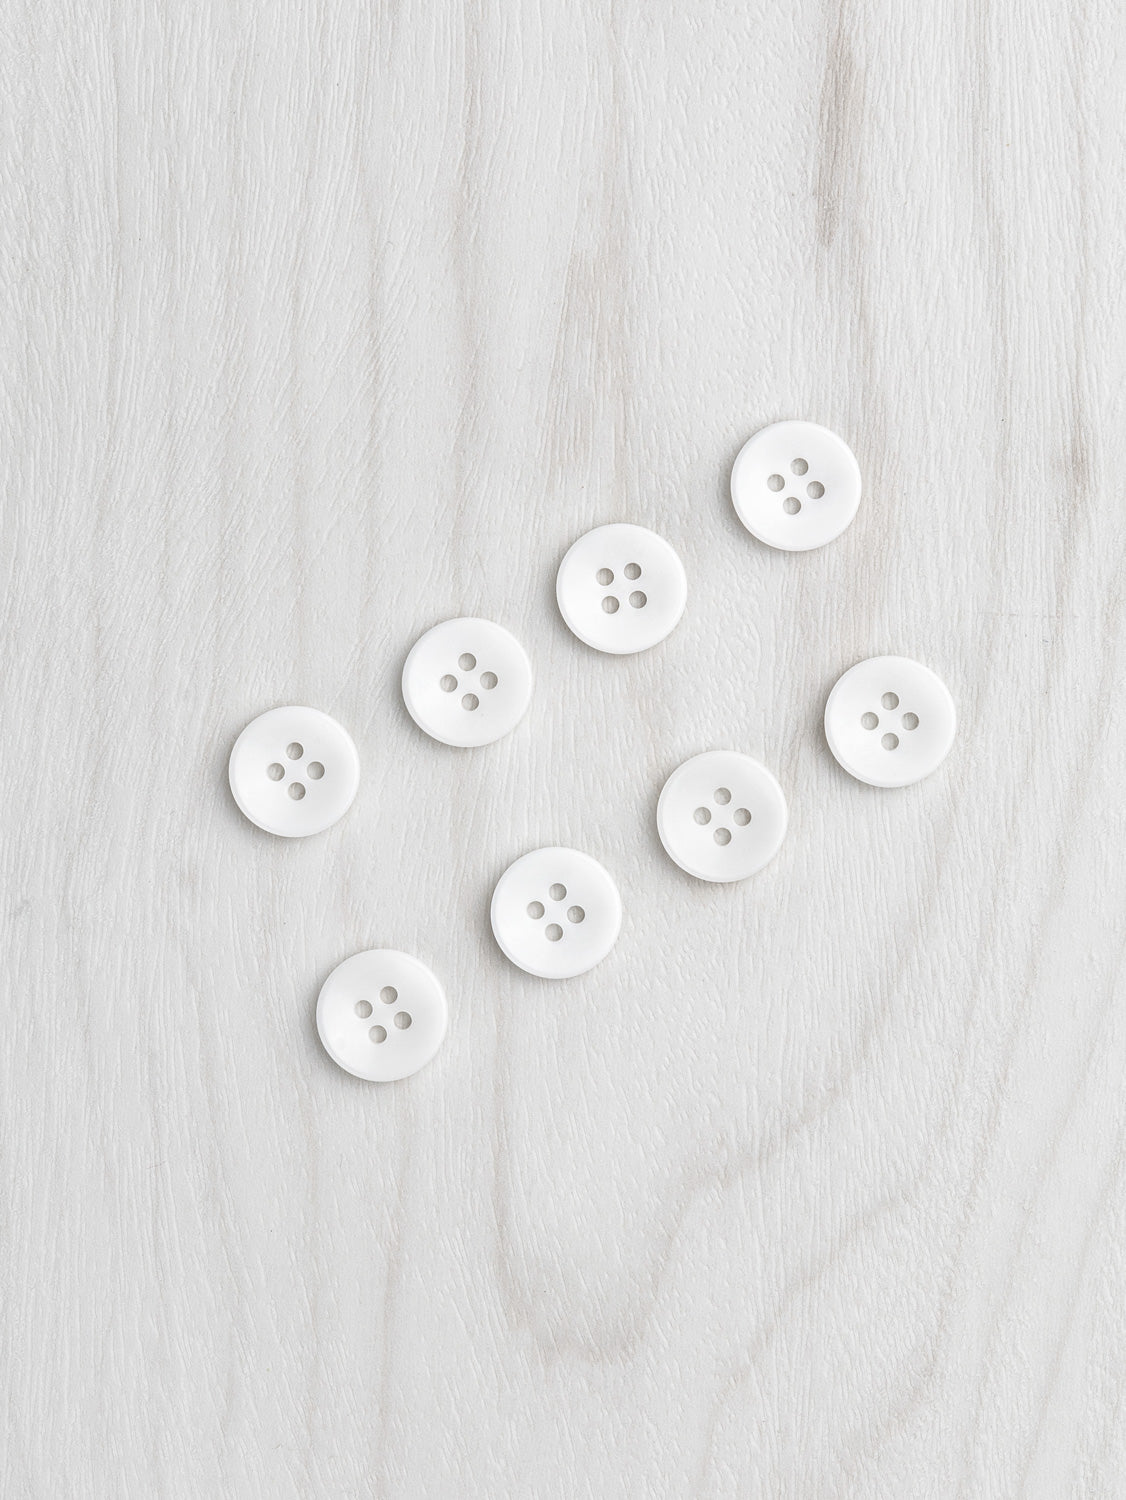 Corozo Button - Apricot White / Satin Matt (multiple sizes)